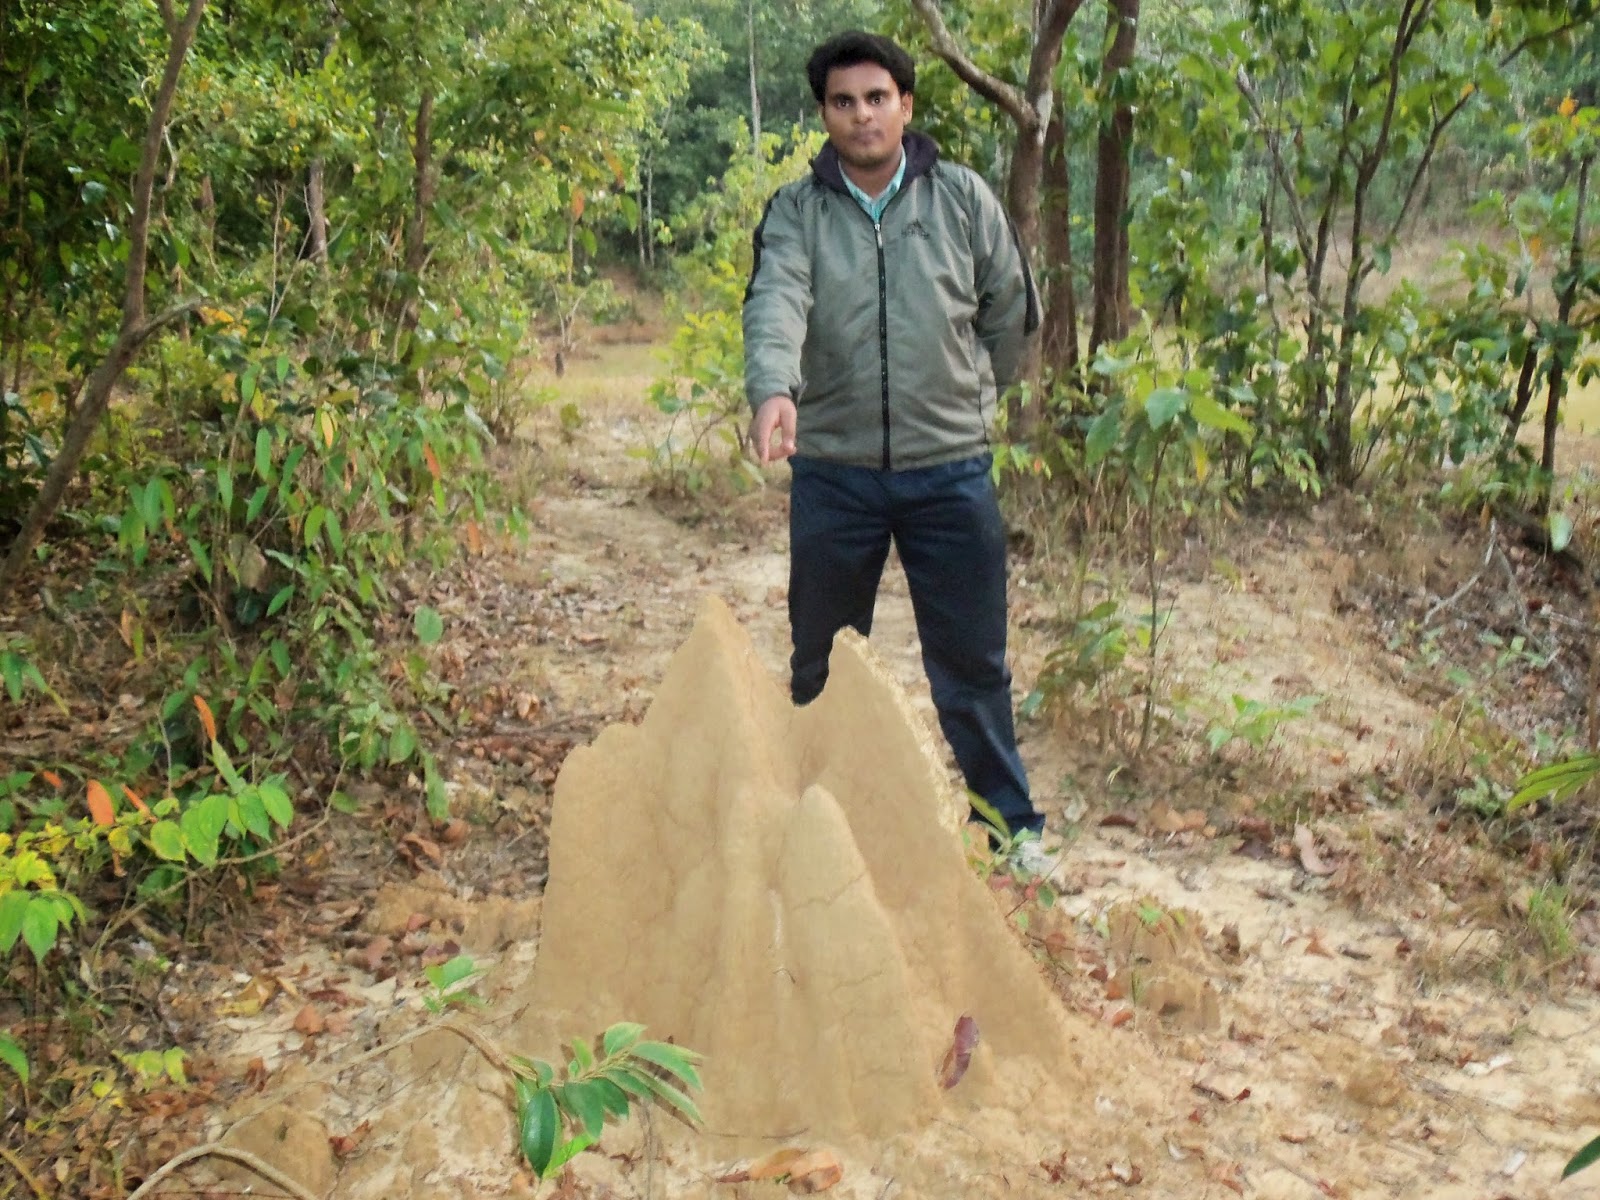 A termite's mound in the jungle